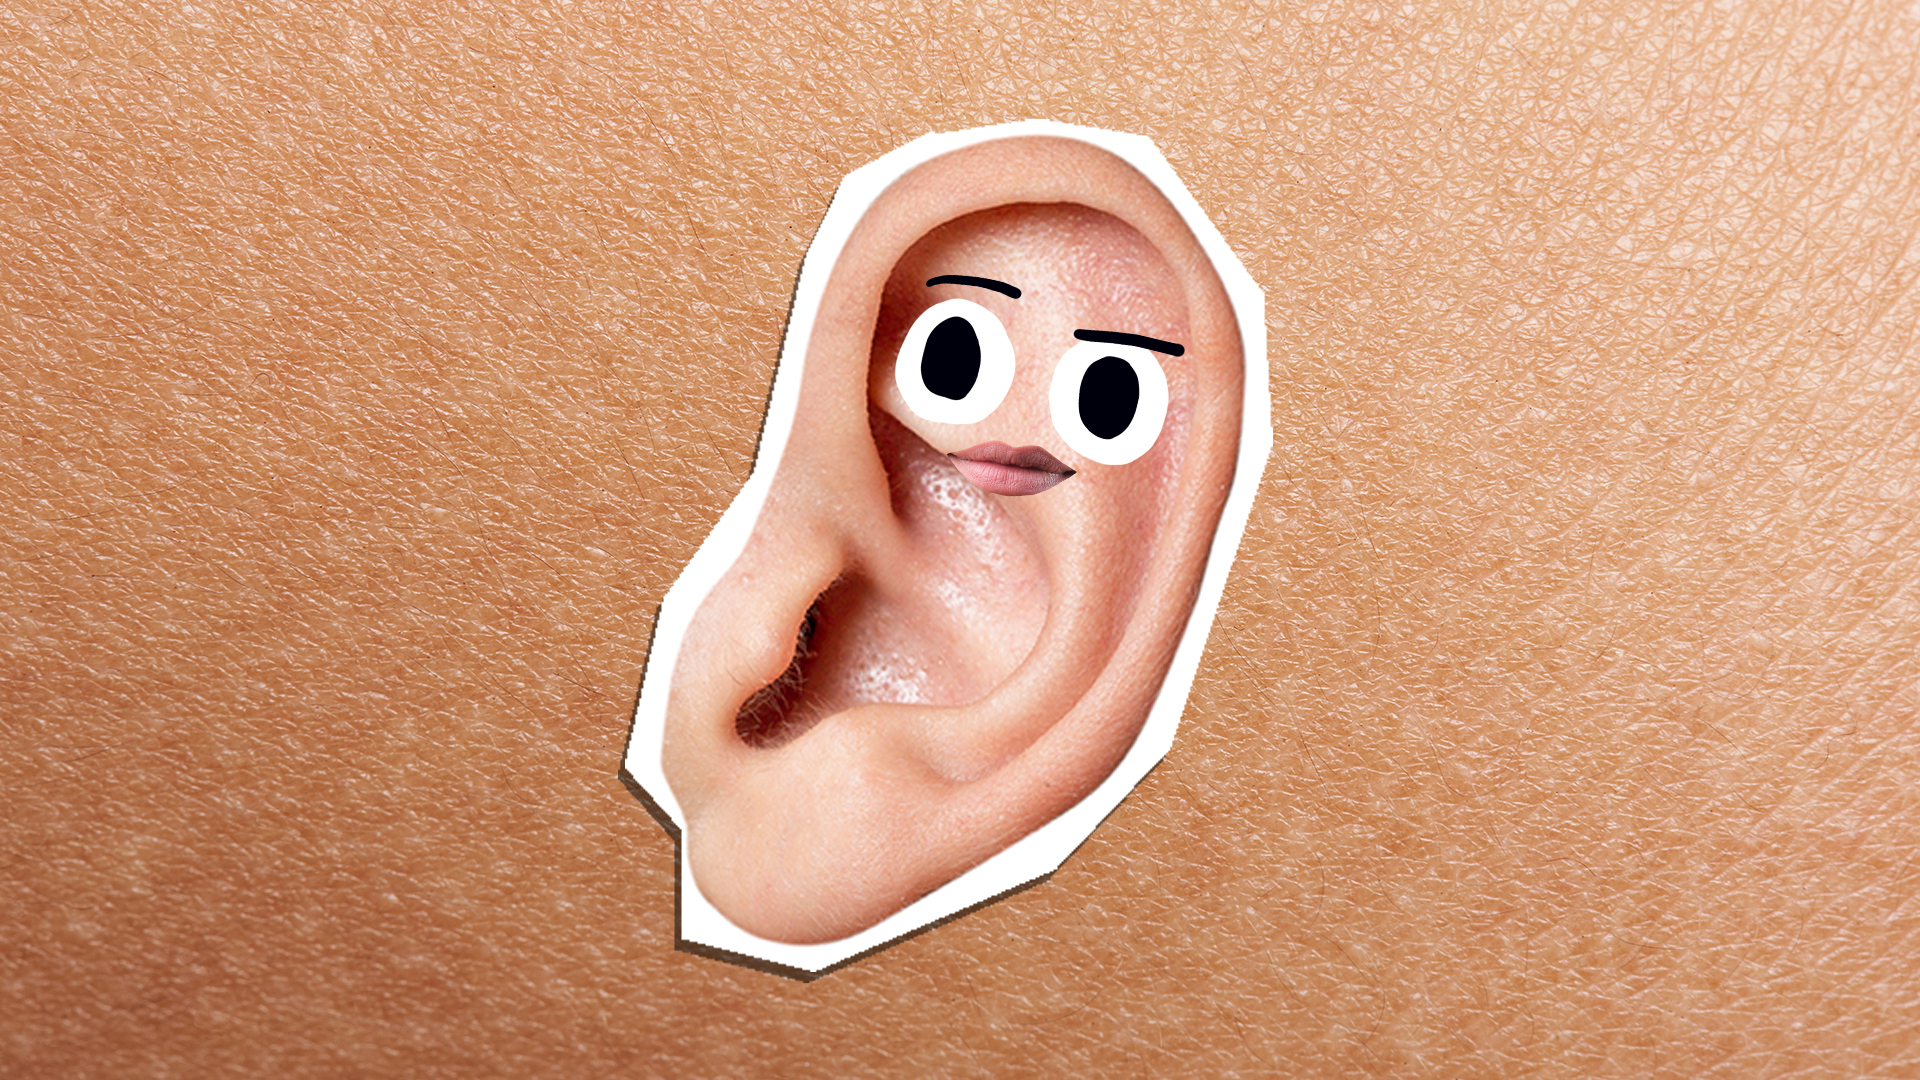 A quizzical ear